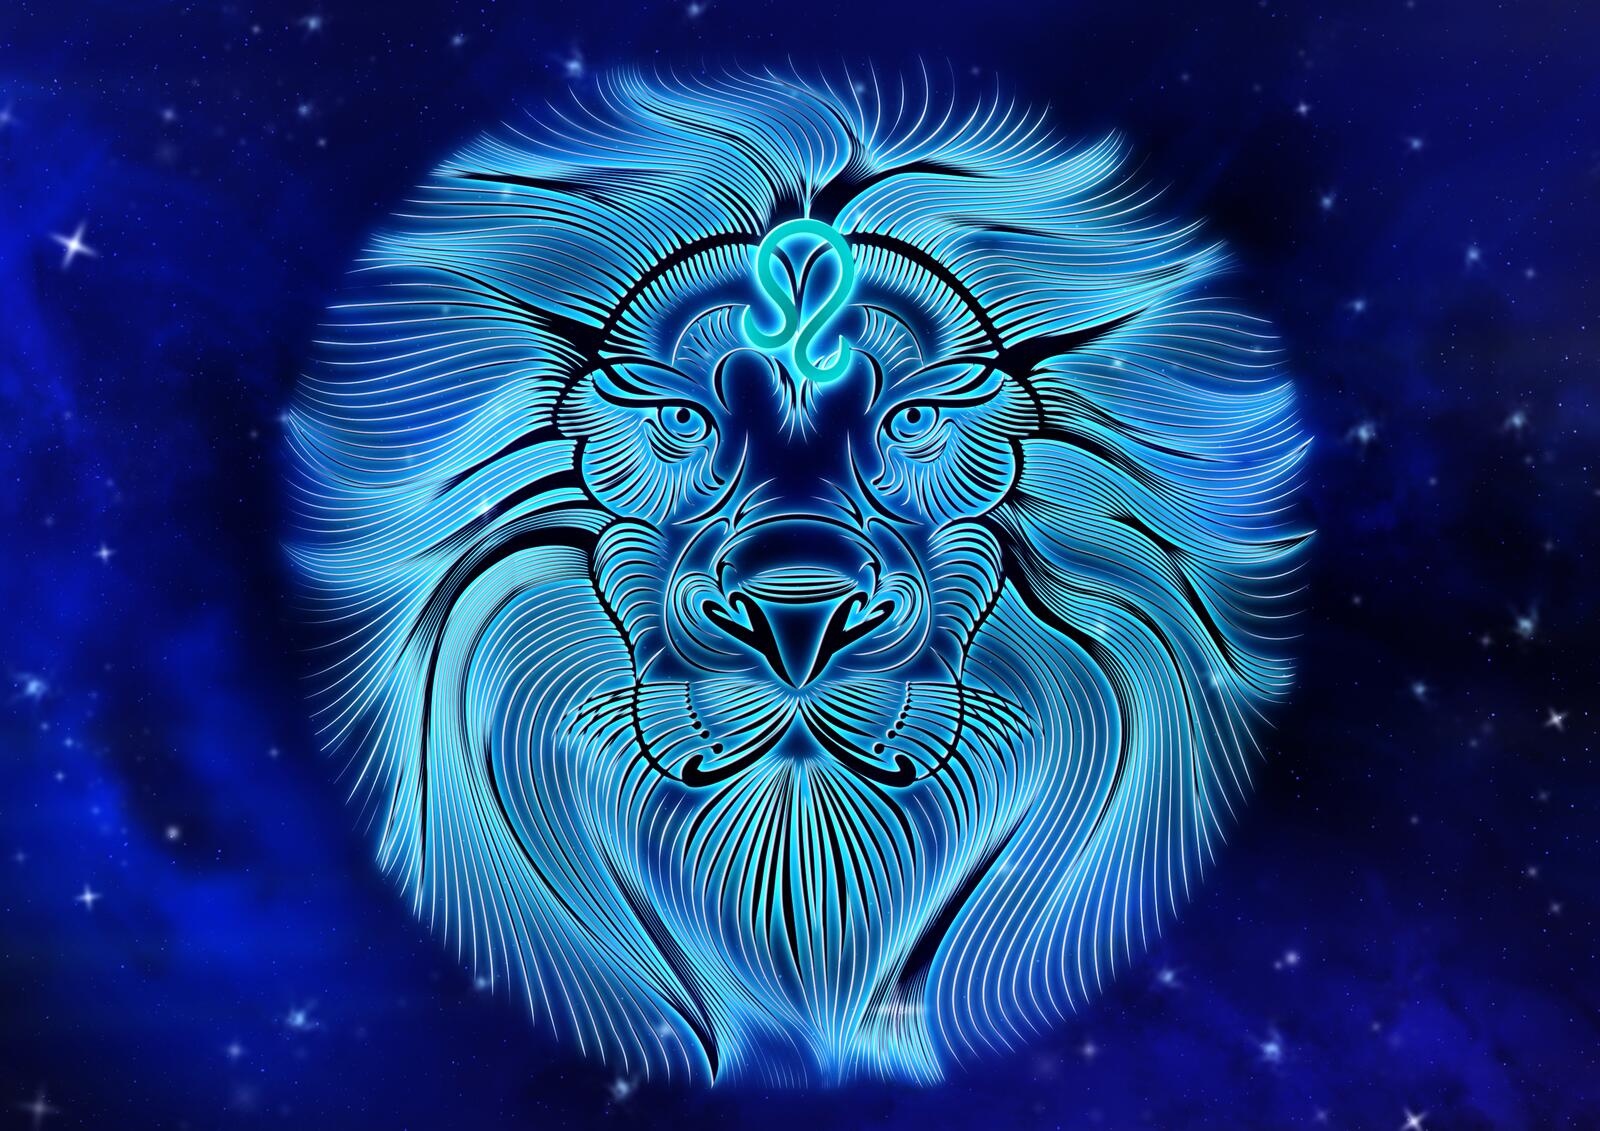 Wallpapers Leo zodiac sign horoscope on the desktop